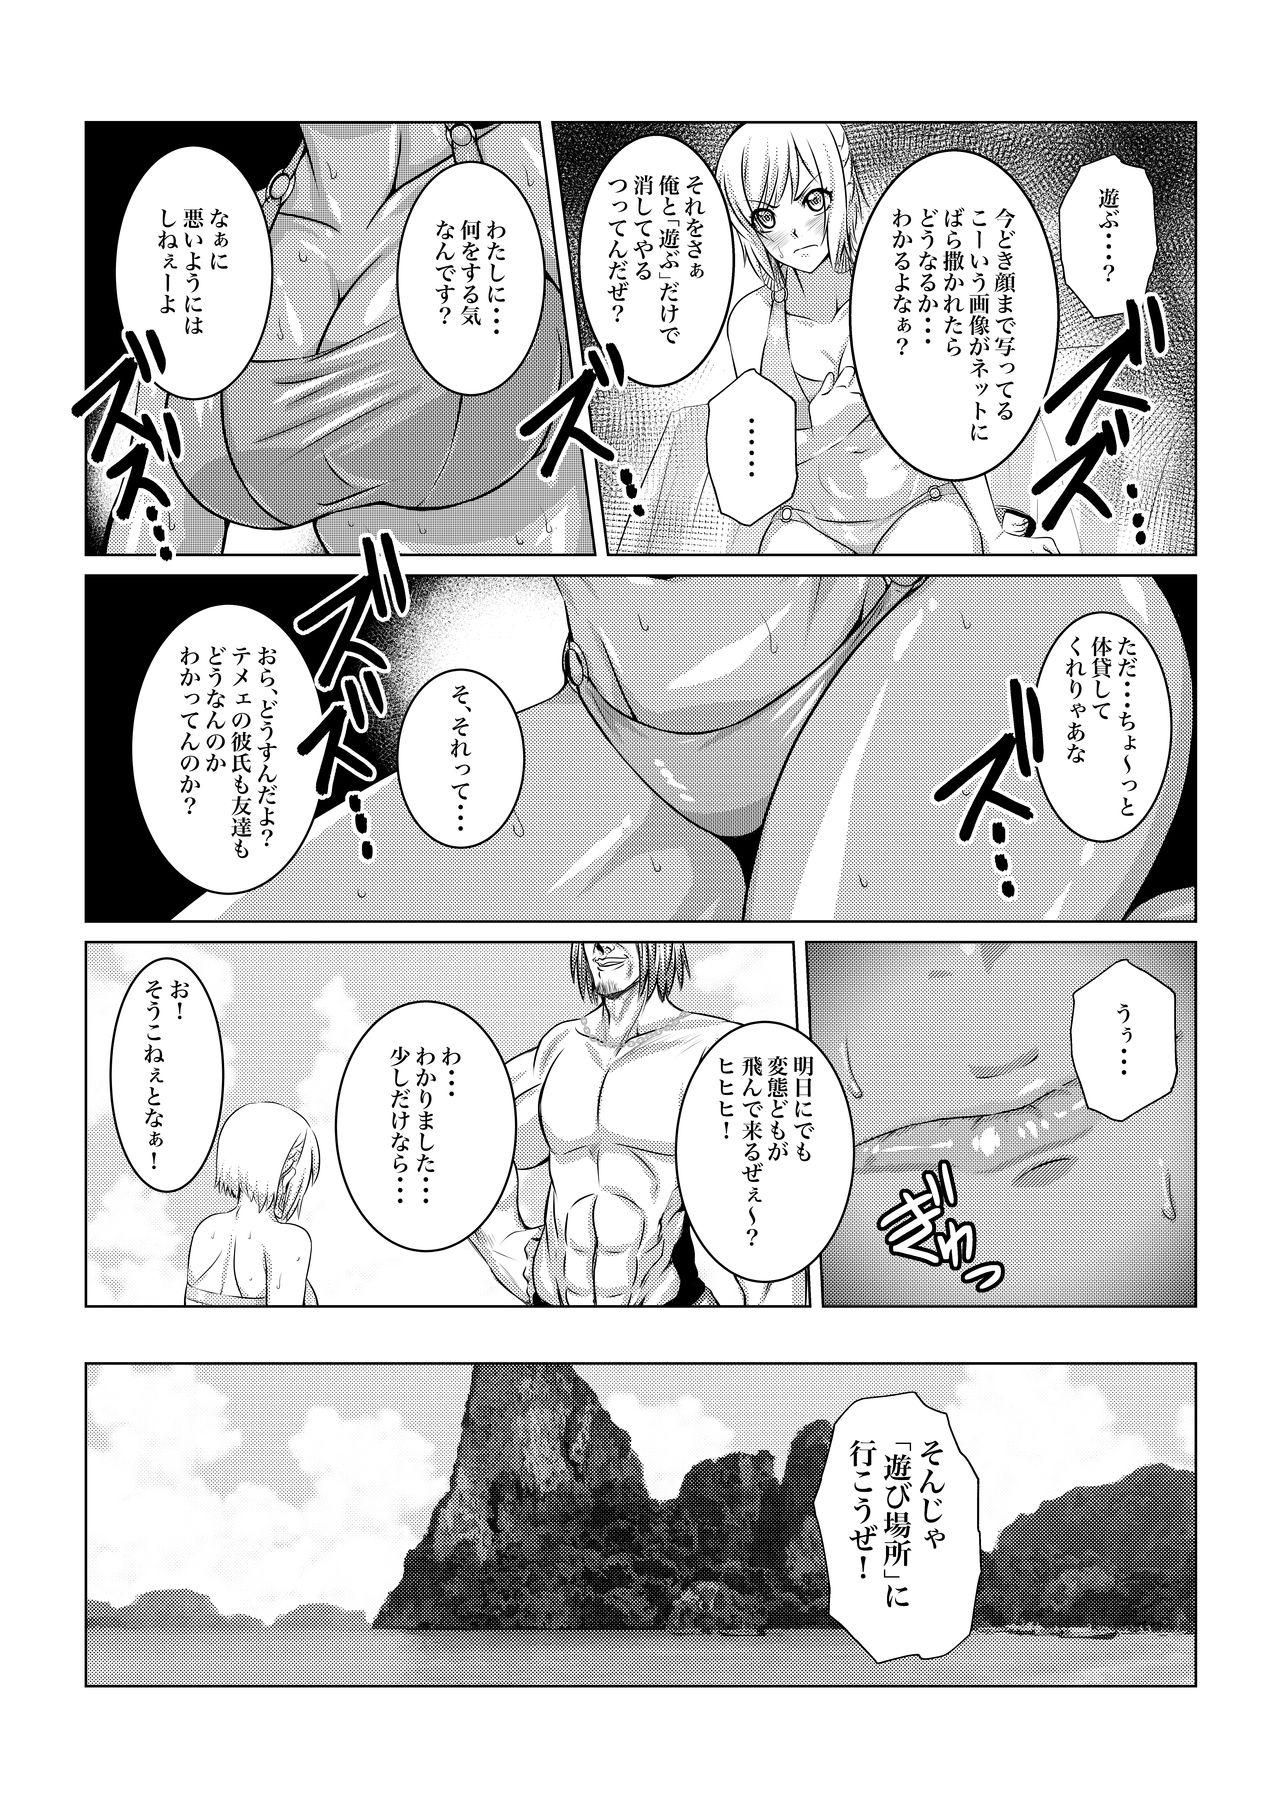 Peituda Gekka Midarezaki - Tales of vesperia Bigdick - Page 8